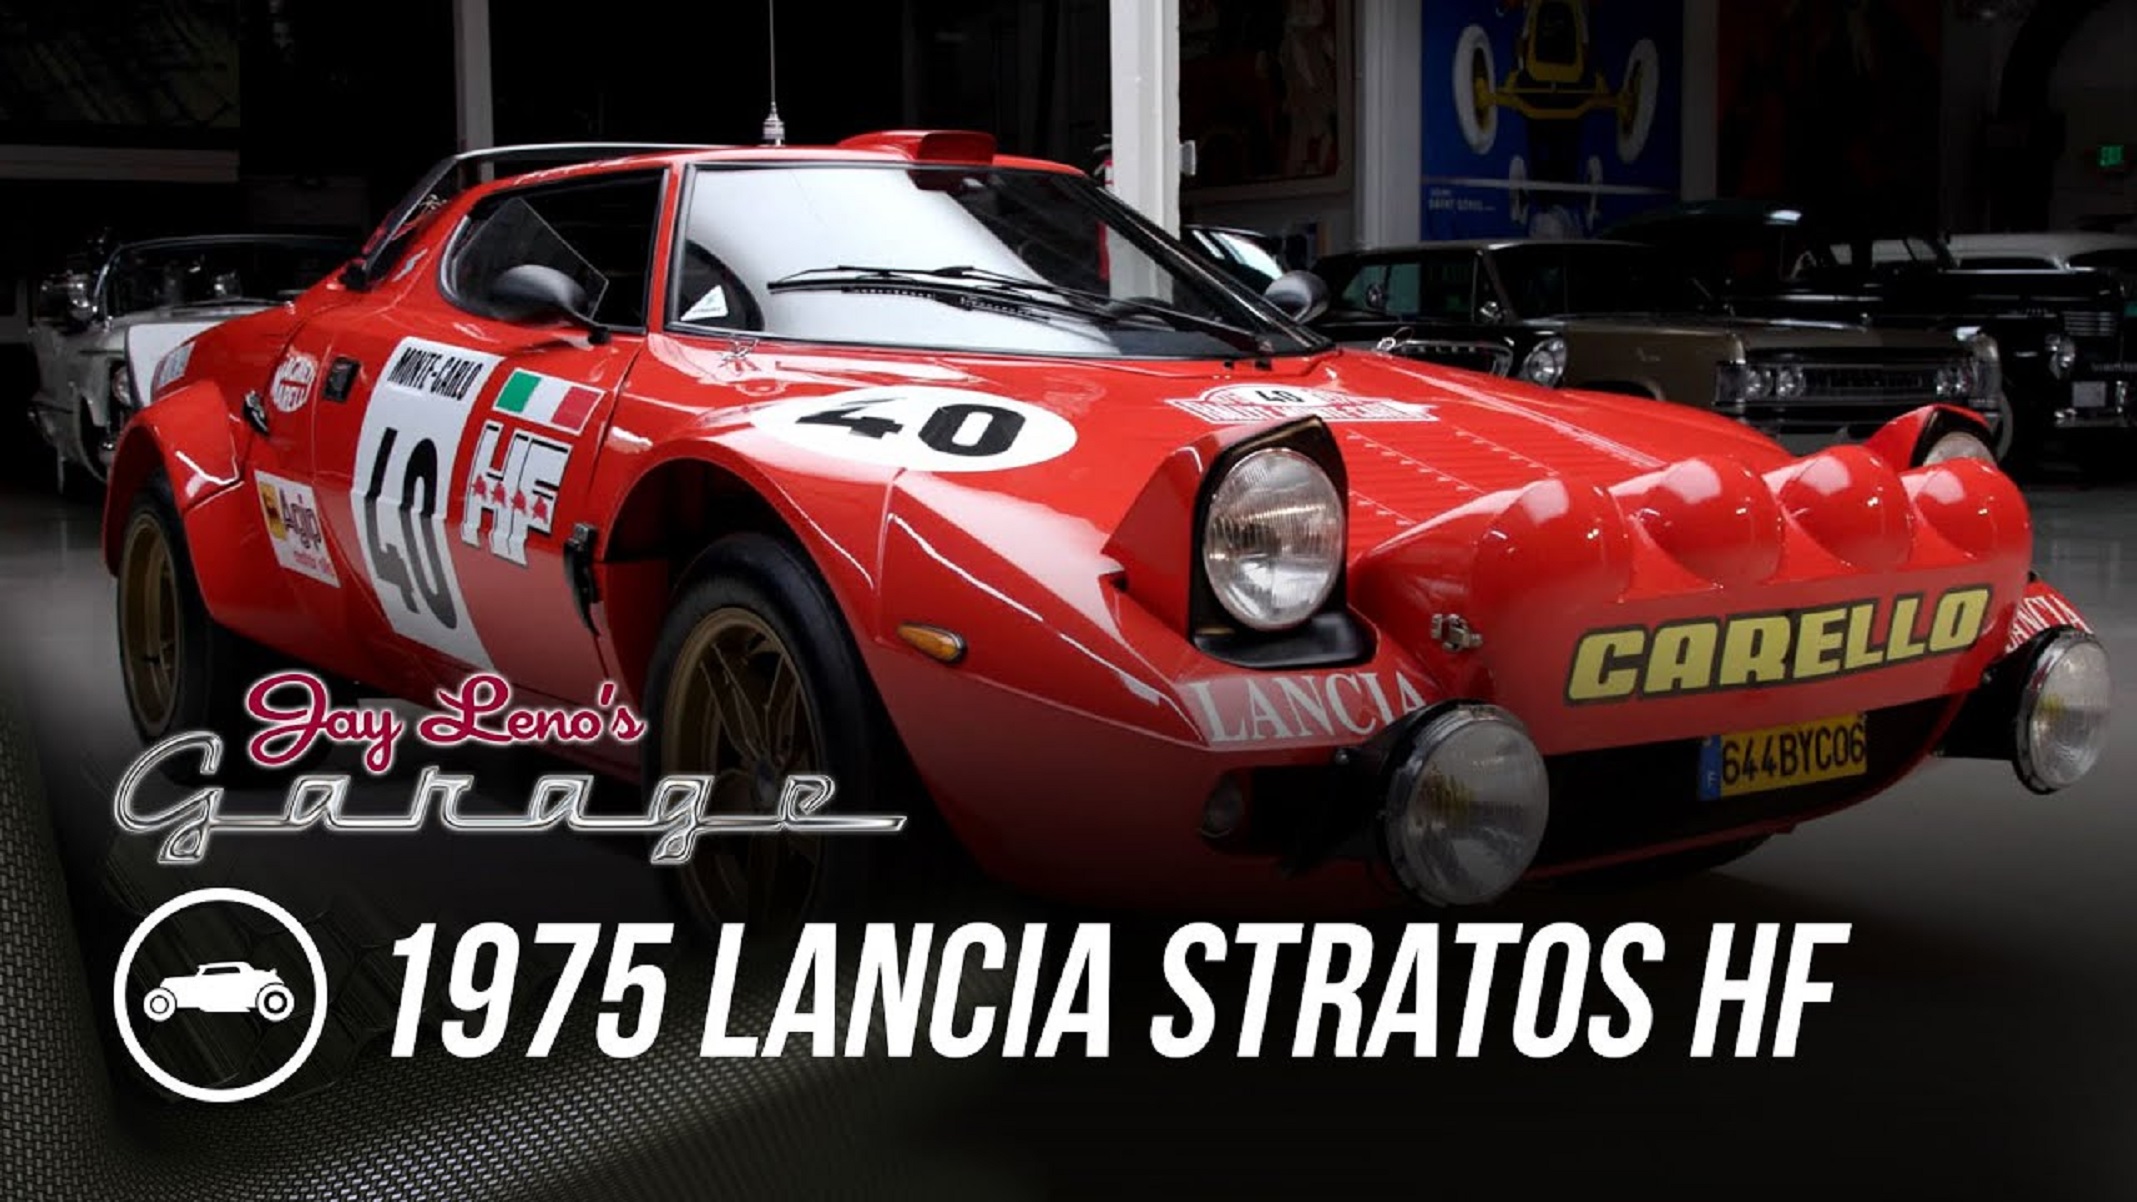 LANCIA STRATOS METAL SIGN.VINTAGE ITALIAN RALLY CARS.CLASSIC CARS. 